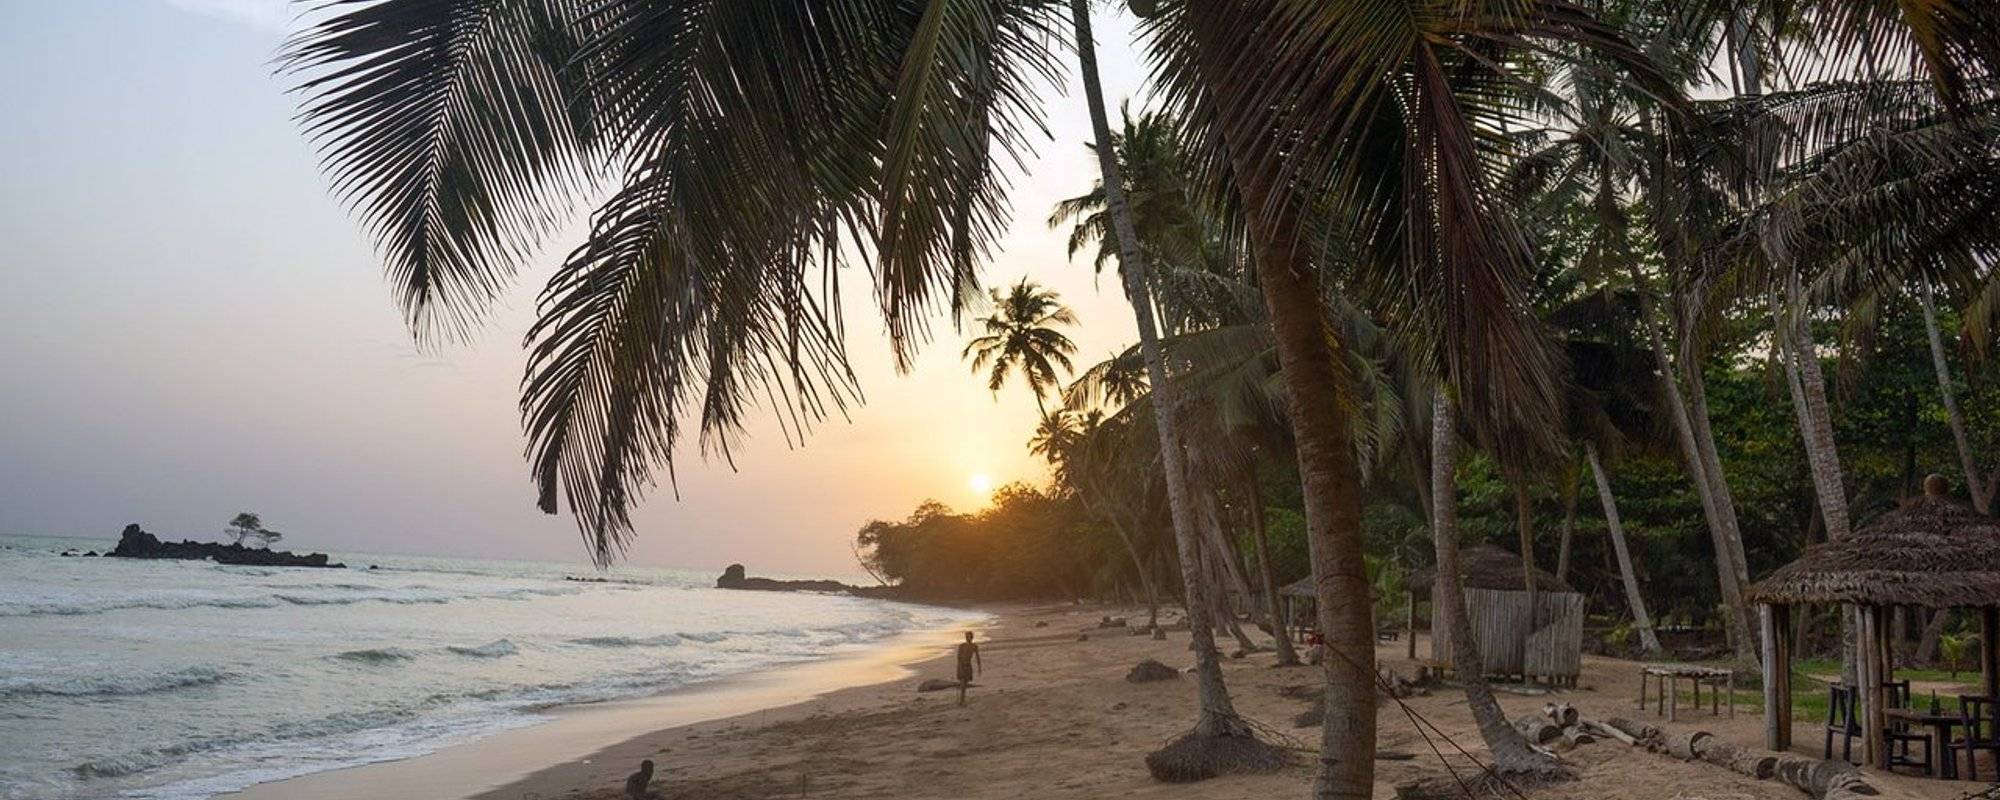 The Ankobra Beach Resort - Ghana